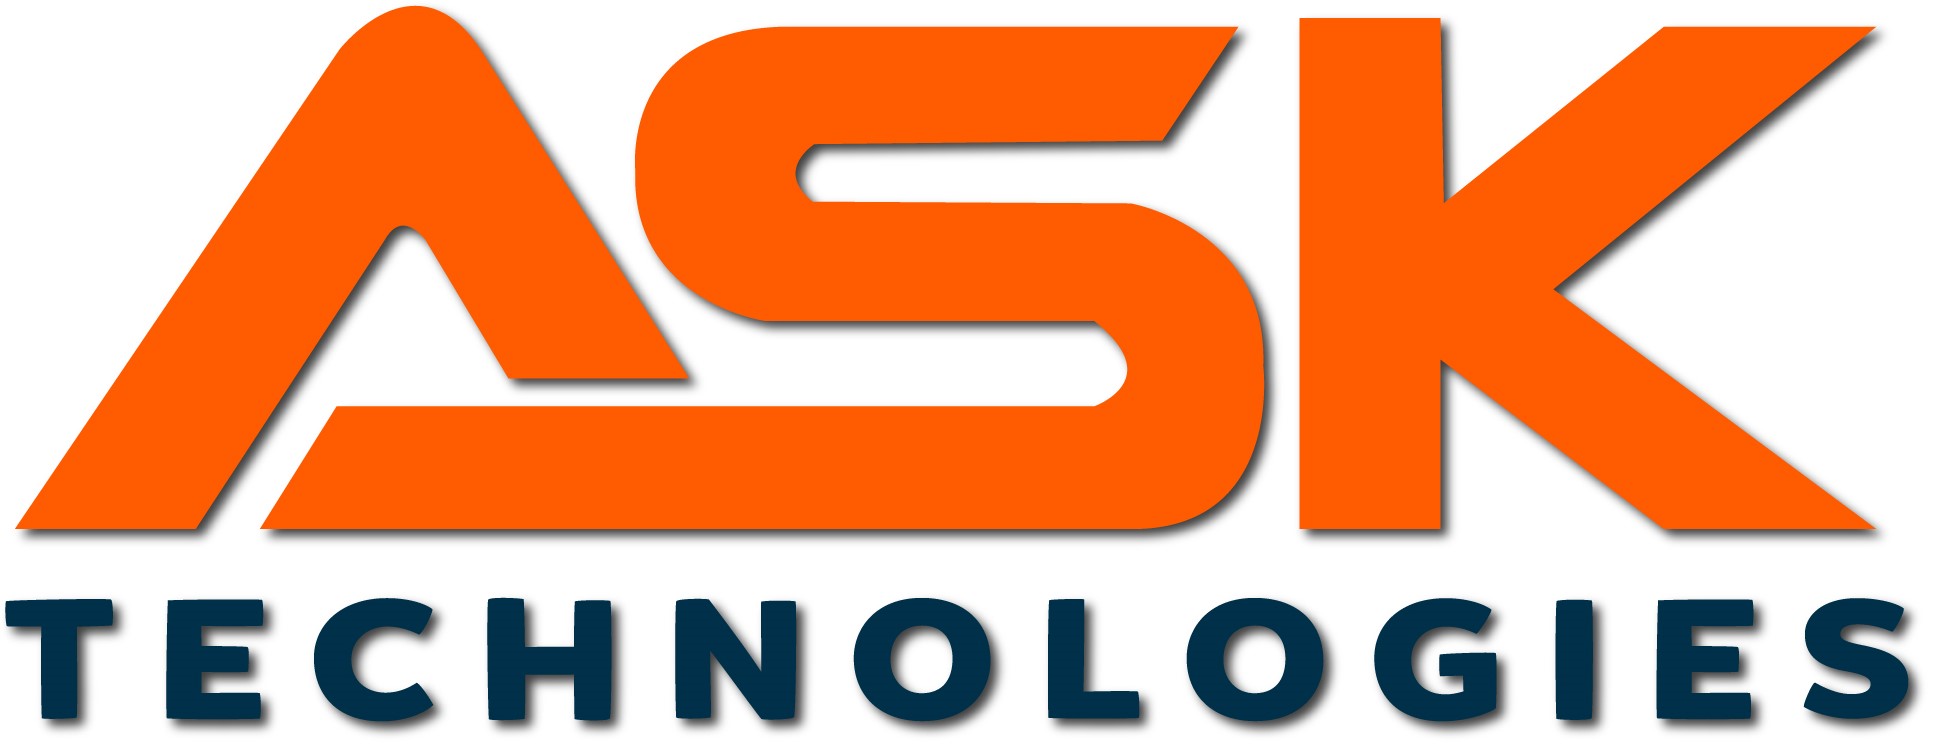 ASK-Technologies-Ltd-logo.jpg